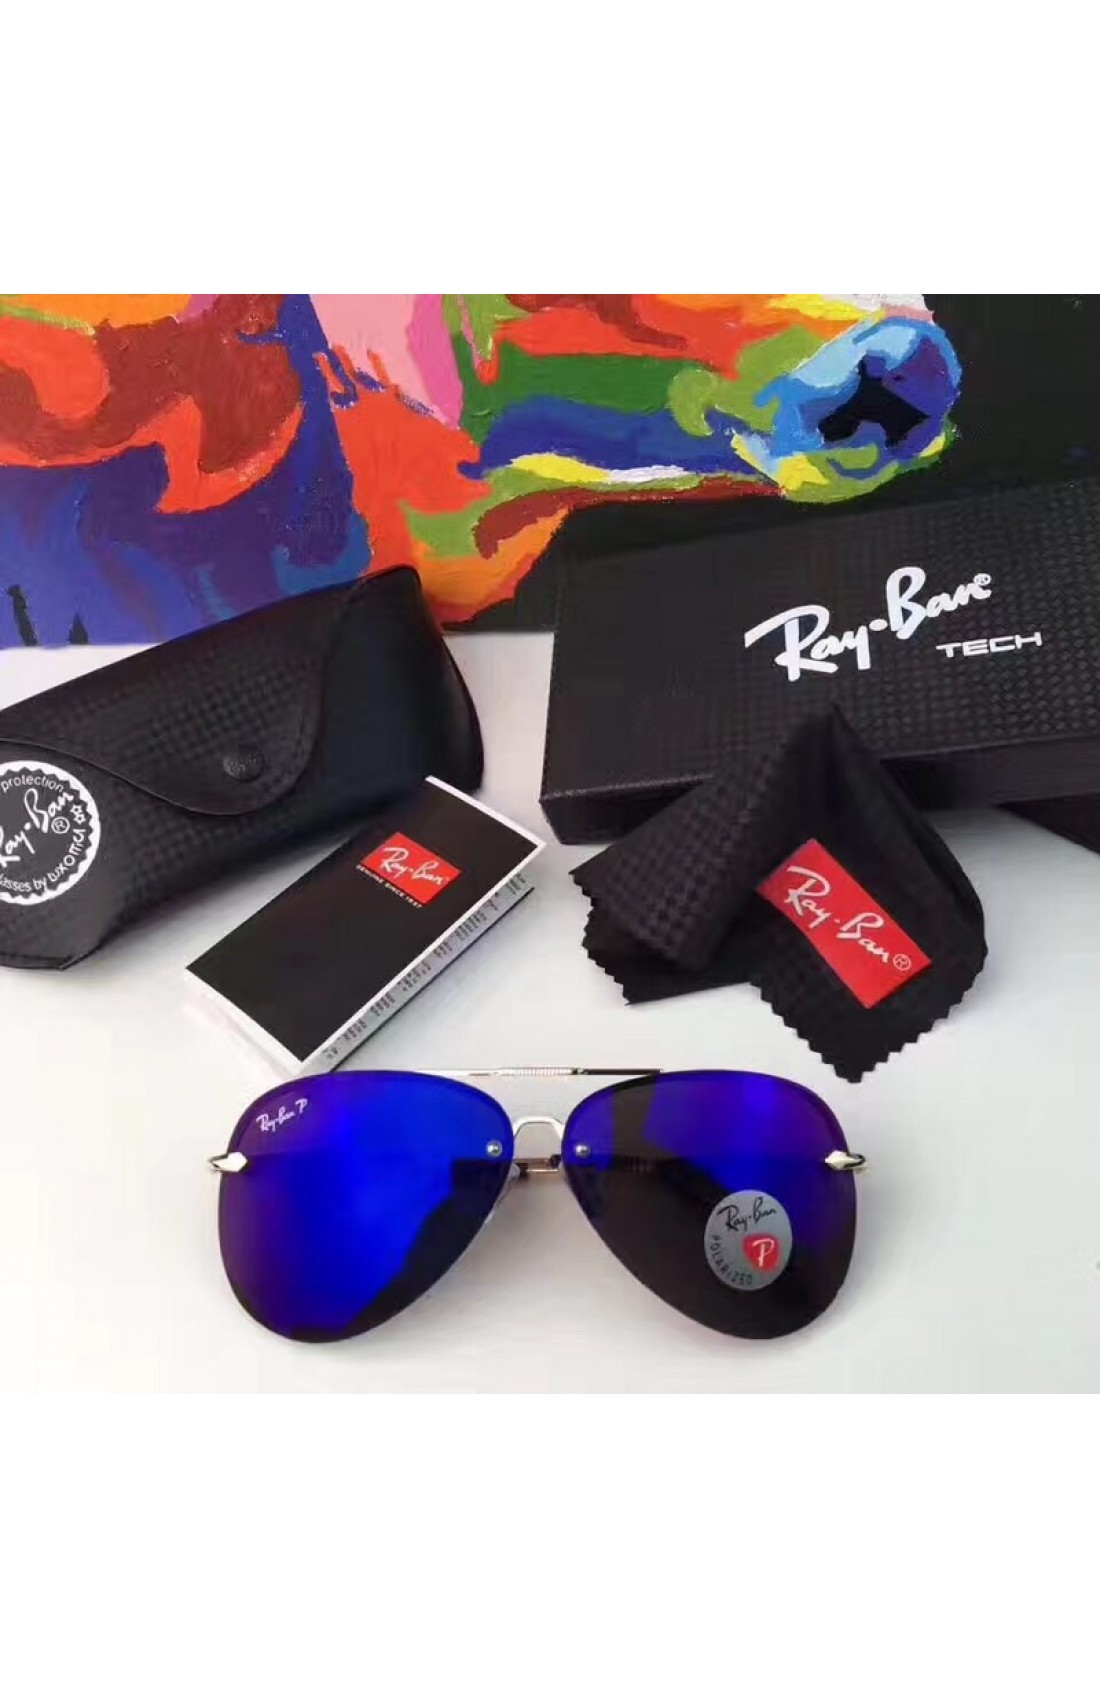 ray ban dark blue sunglasses